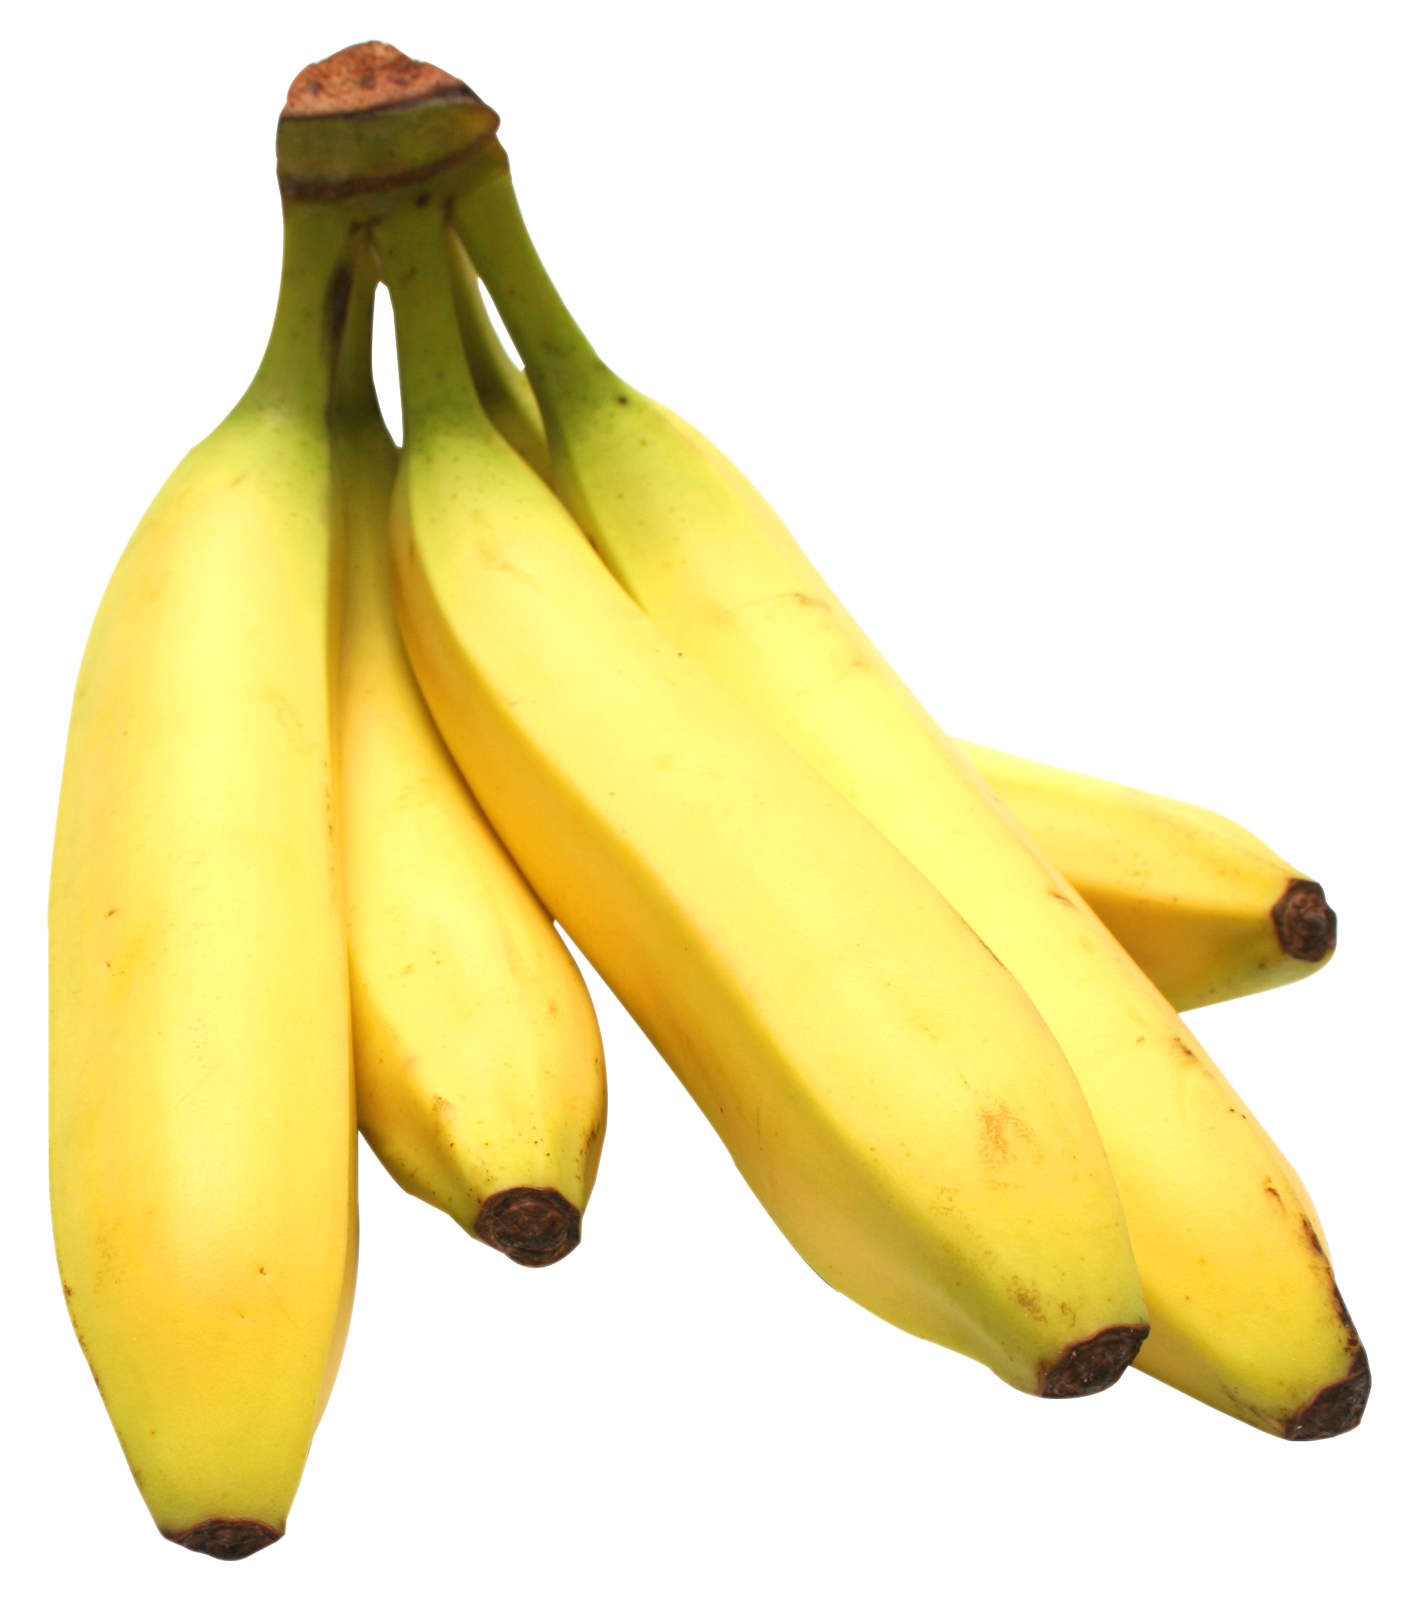 https://purepng.com/public/uploads/large/purepng.com-banana-bunchfruitsbanana-bunchyellowfruit-981524753883mhbfi.png